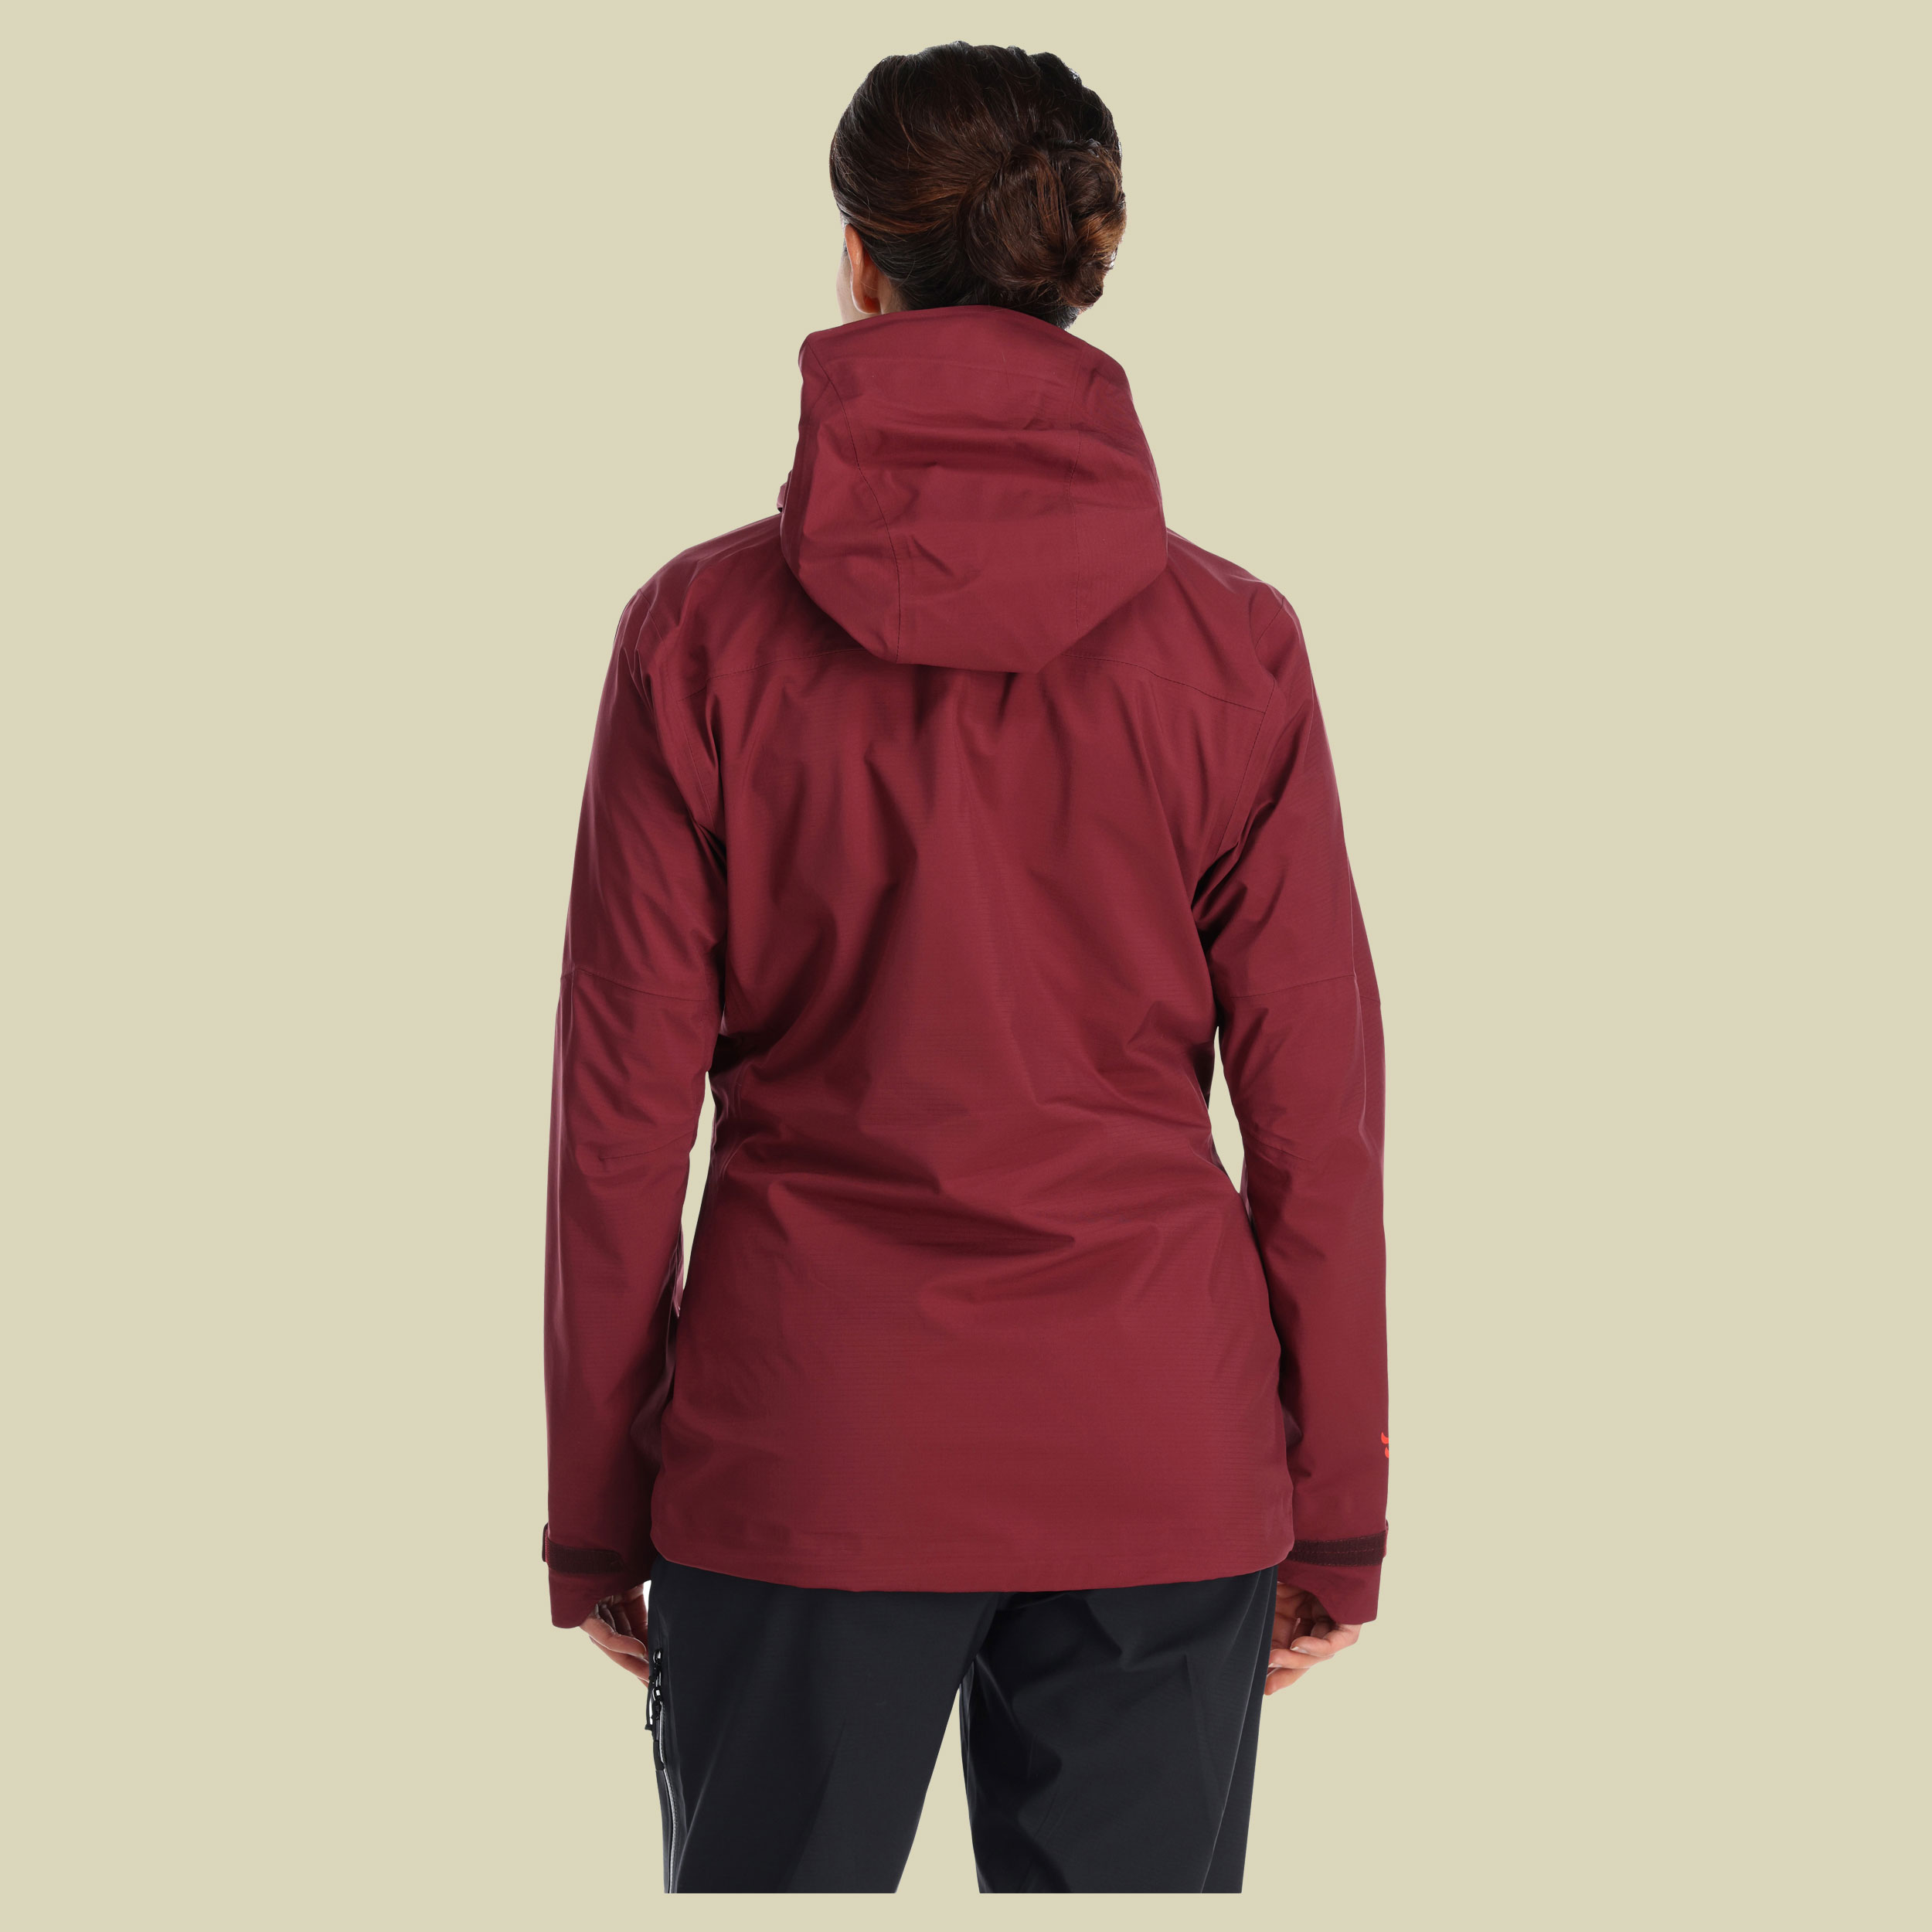 Firewall Jacket Women Größe 16 (44) Farbe deep heather